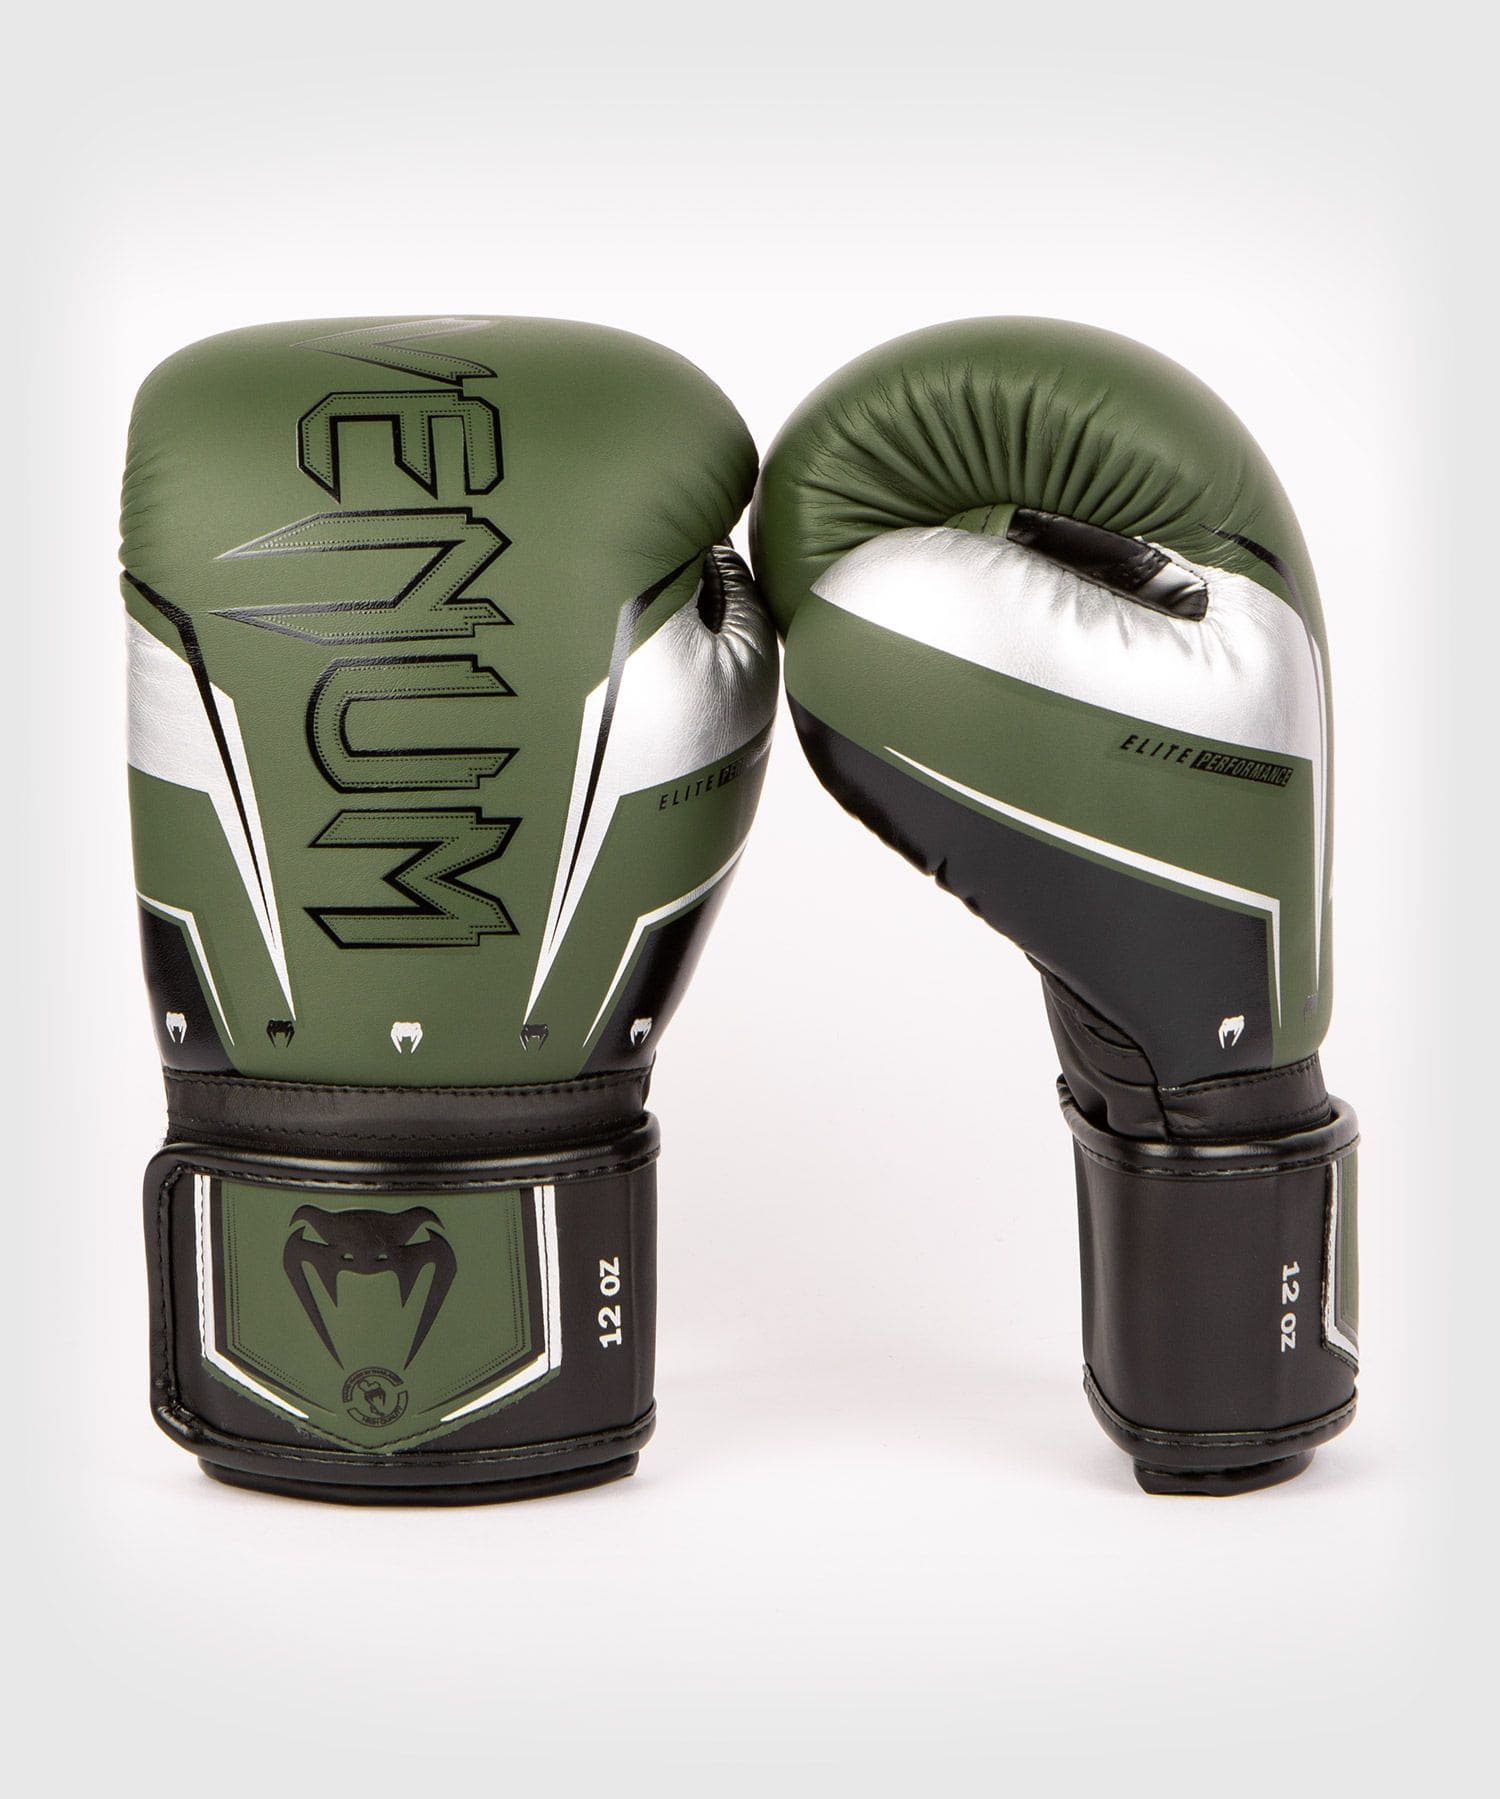 Buy Venum Boxing Gloves Elite Evo Khaki/Silver online ✓ - emparor Fight Shop